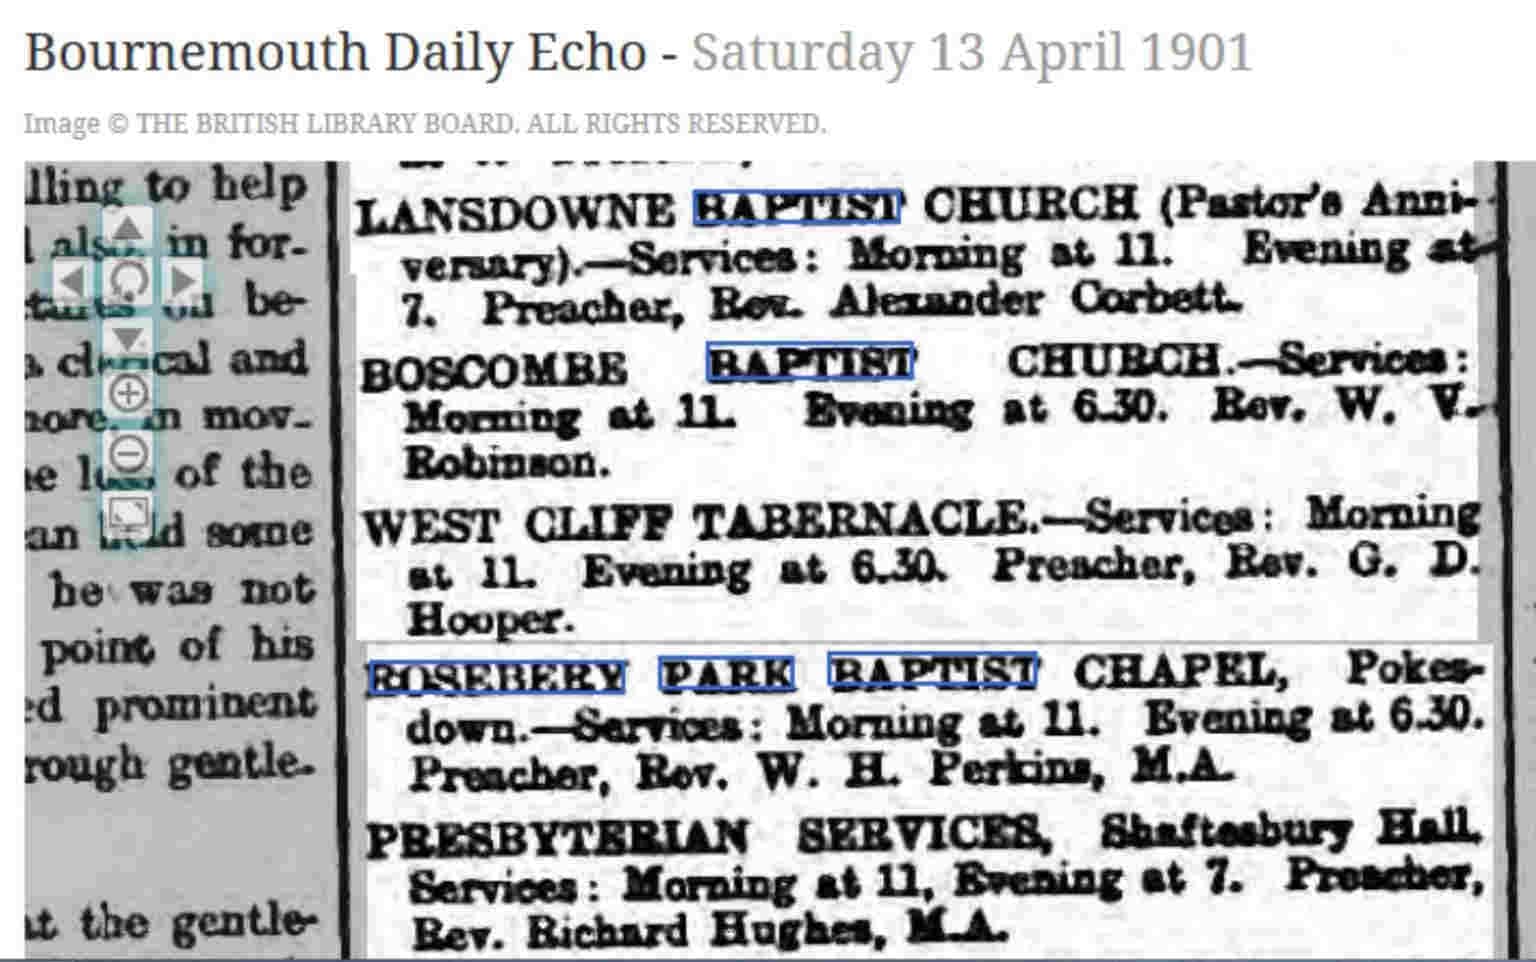 Rosebery Park Baptist Chapel Pokesdown service times 1901 newspaper ad